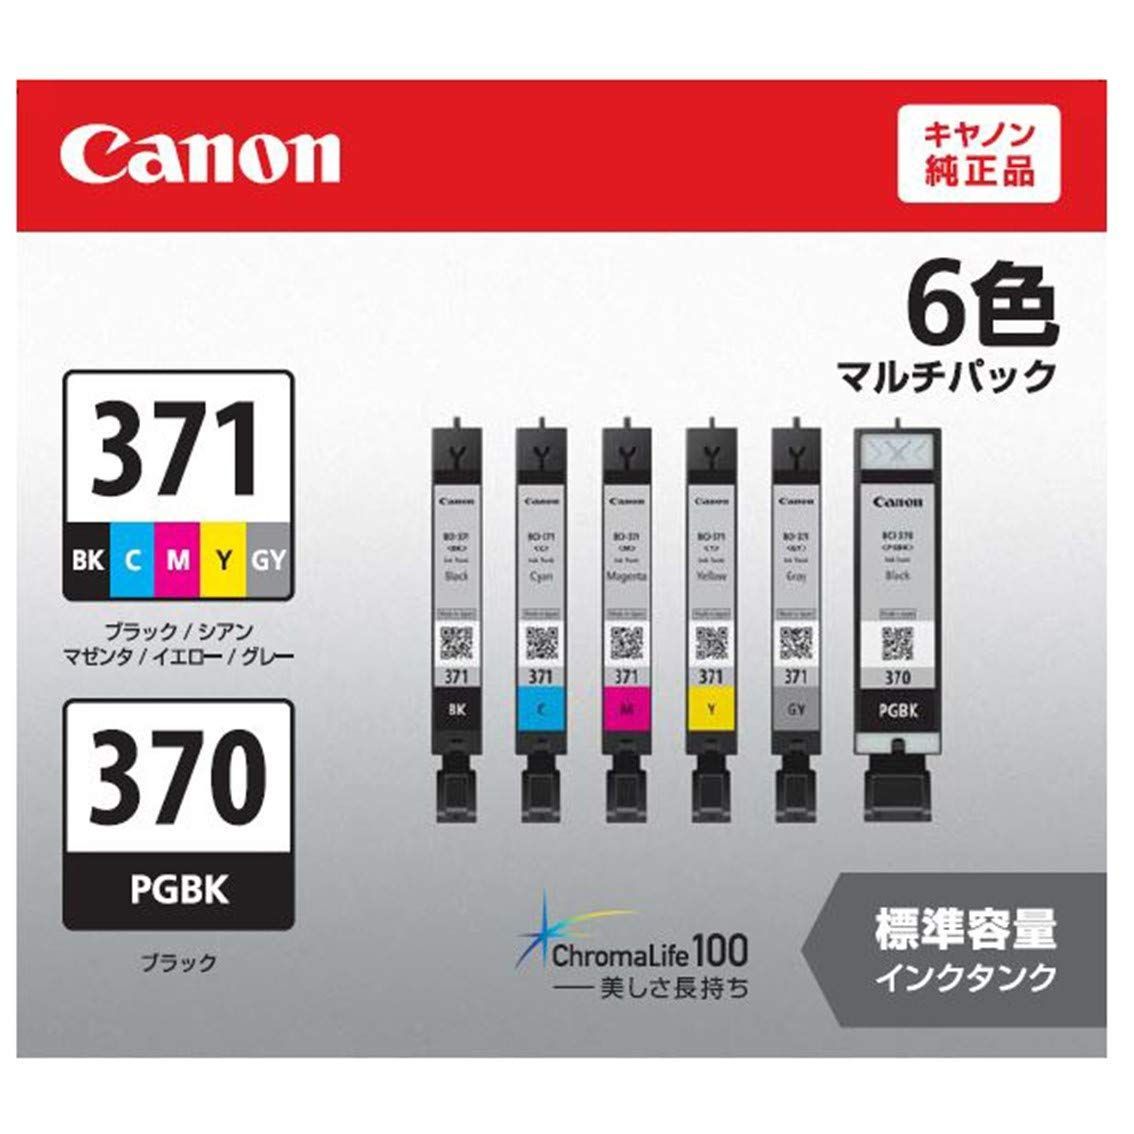 新品未使用 Canon BCI-371XLBK GY M C 370-PGBKセット